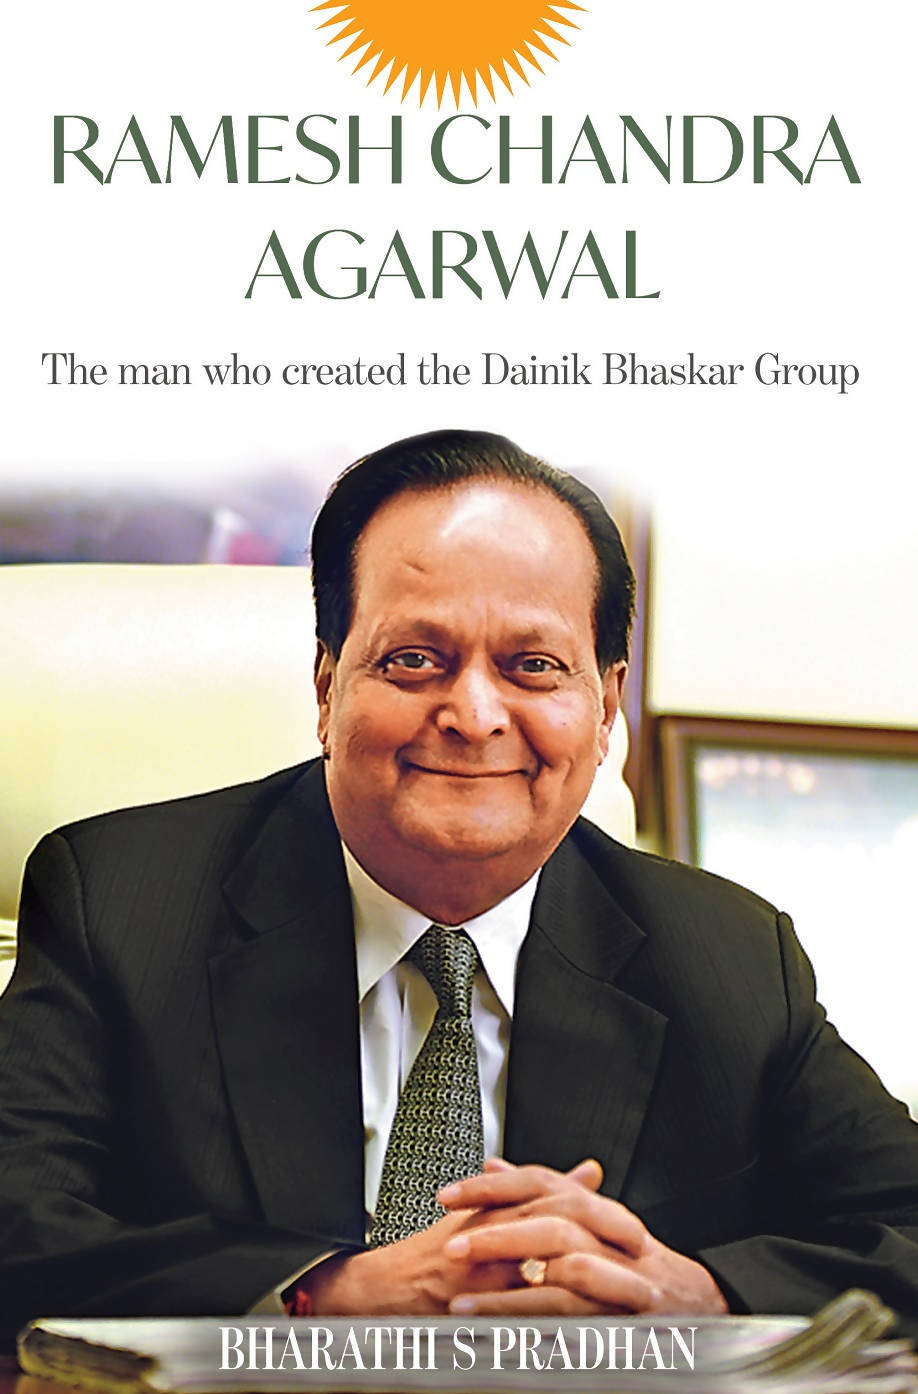 RAMESH CHANDRA AGARWAL, the Man Who Created the Dainik Bhaskar Group